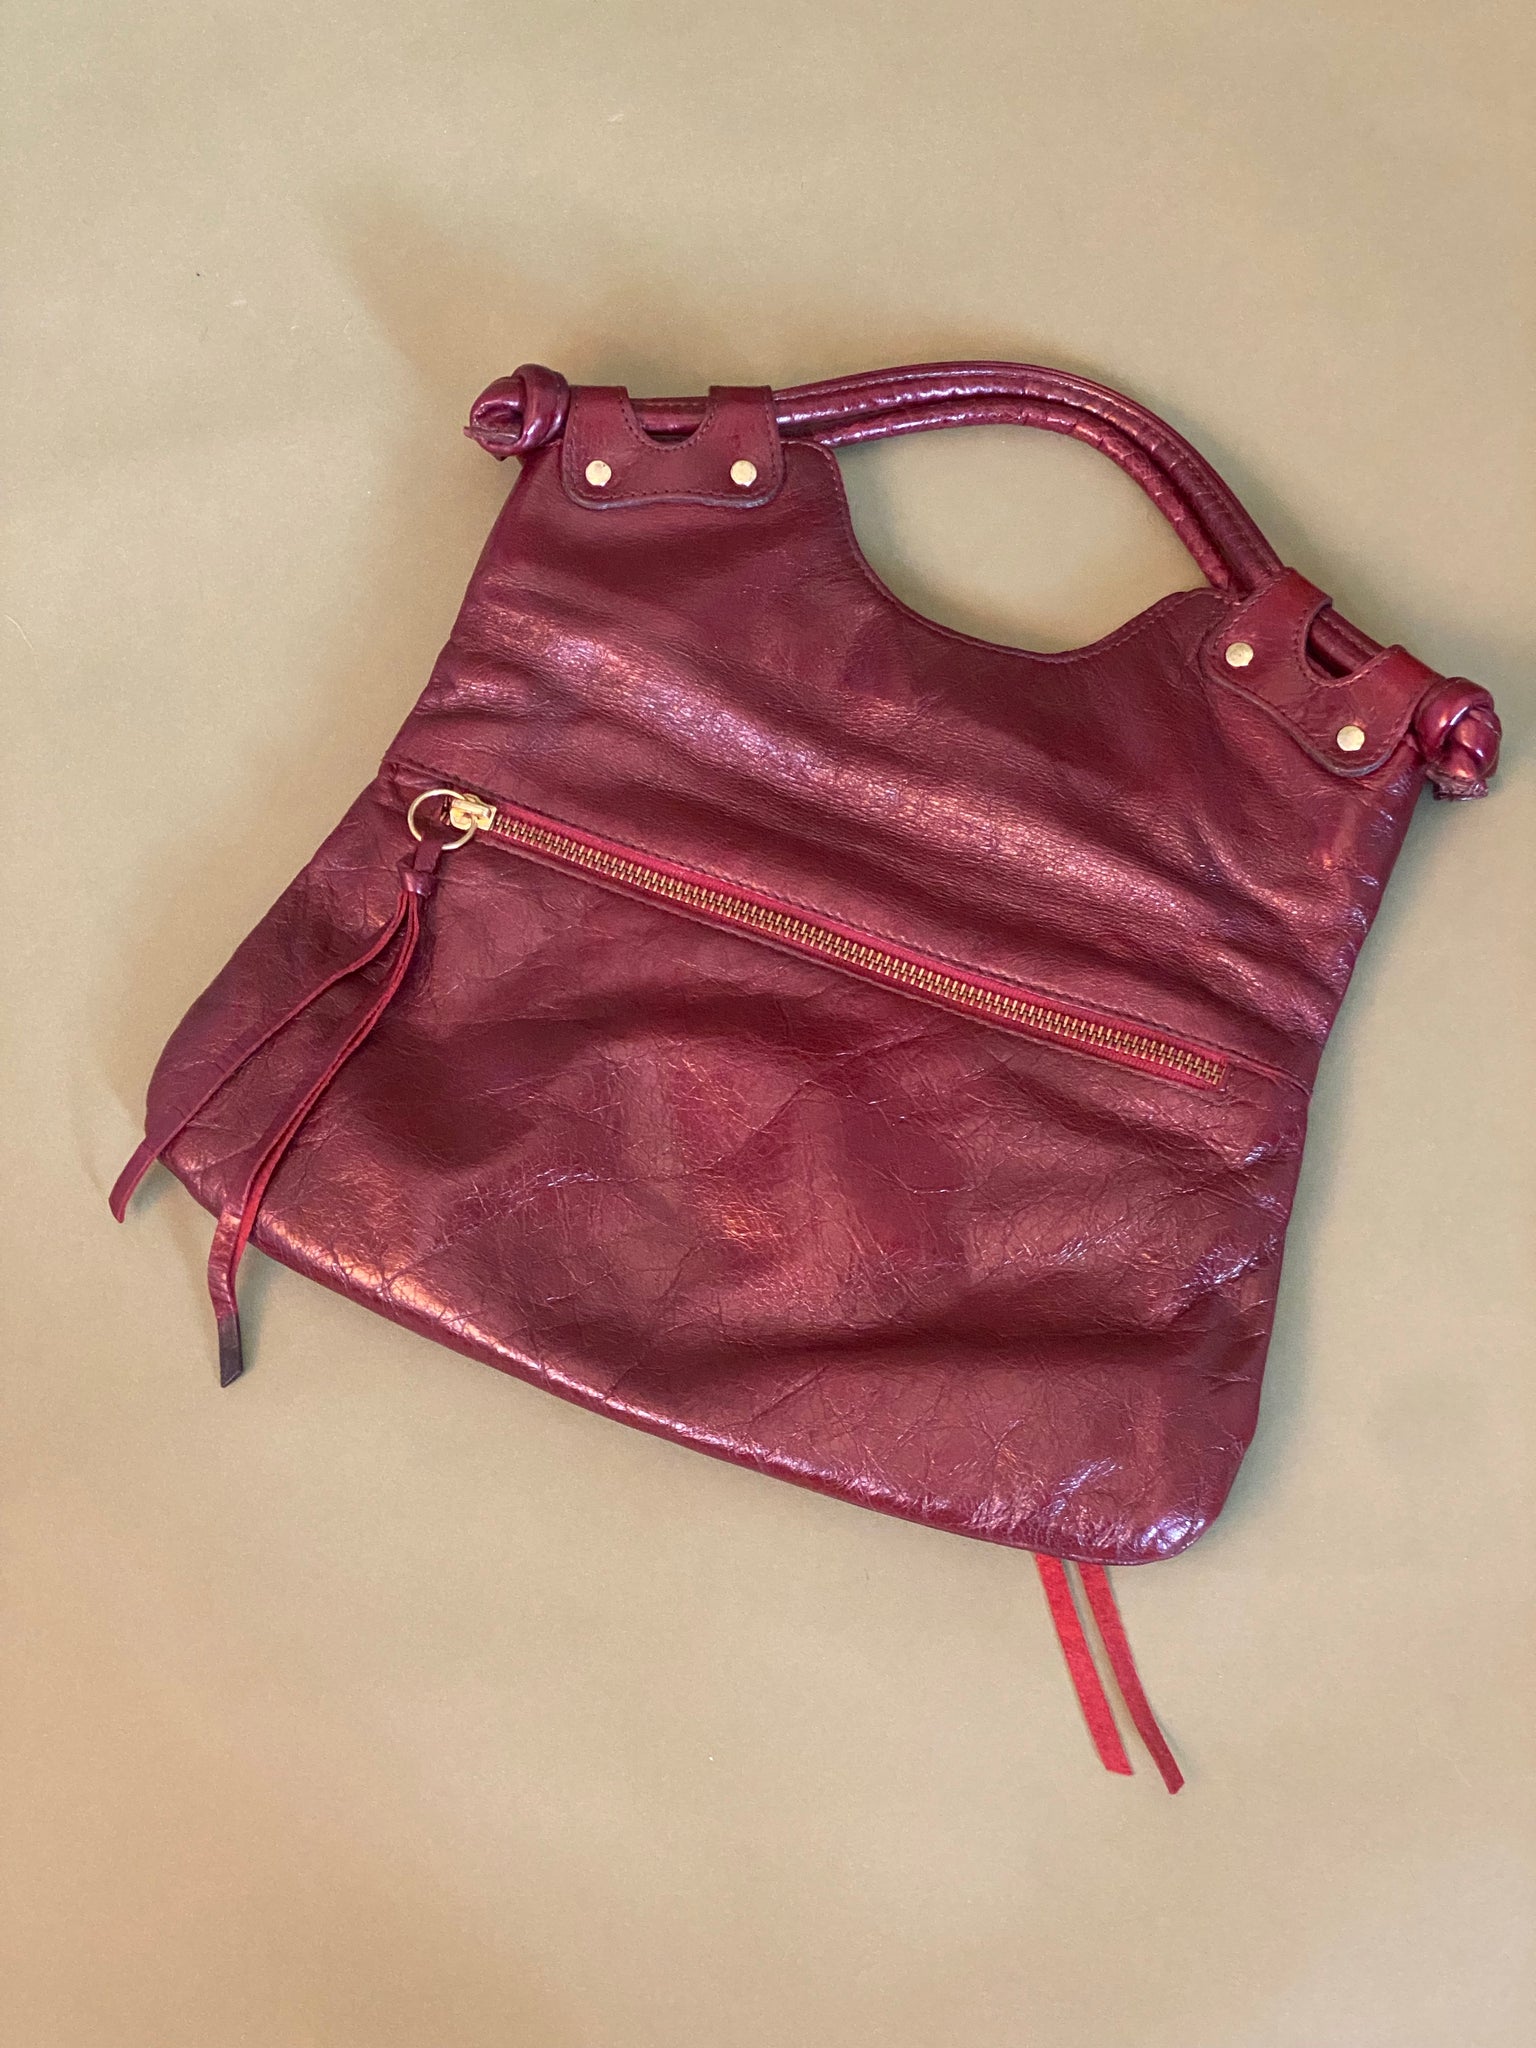 Burgundy Leather bag